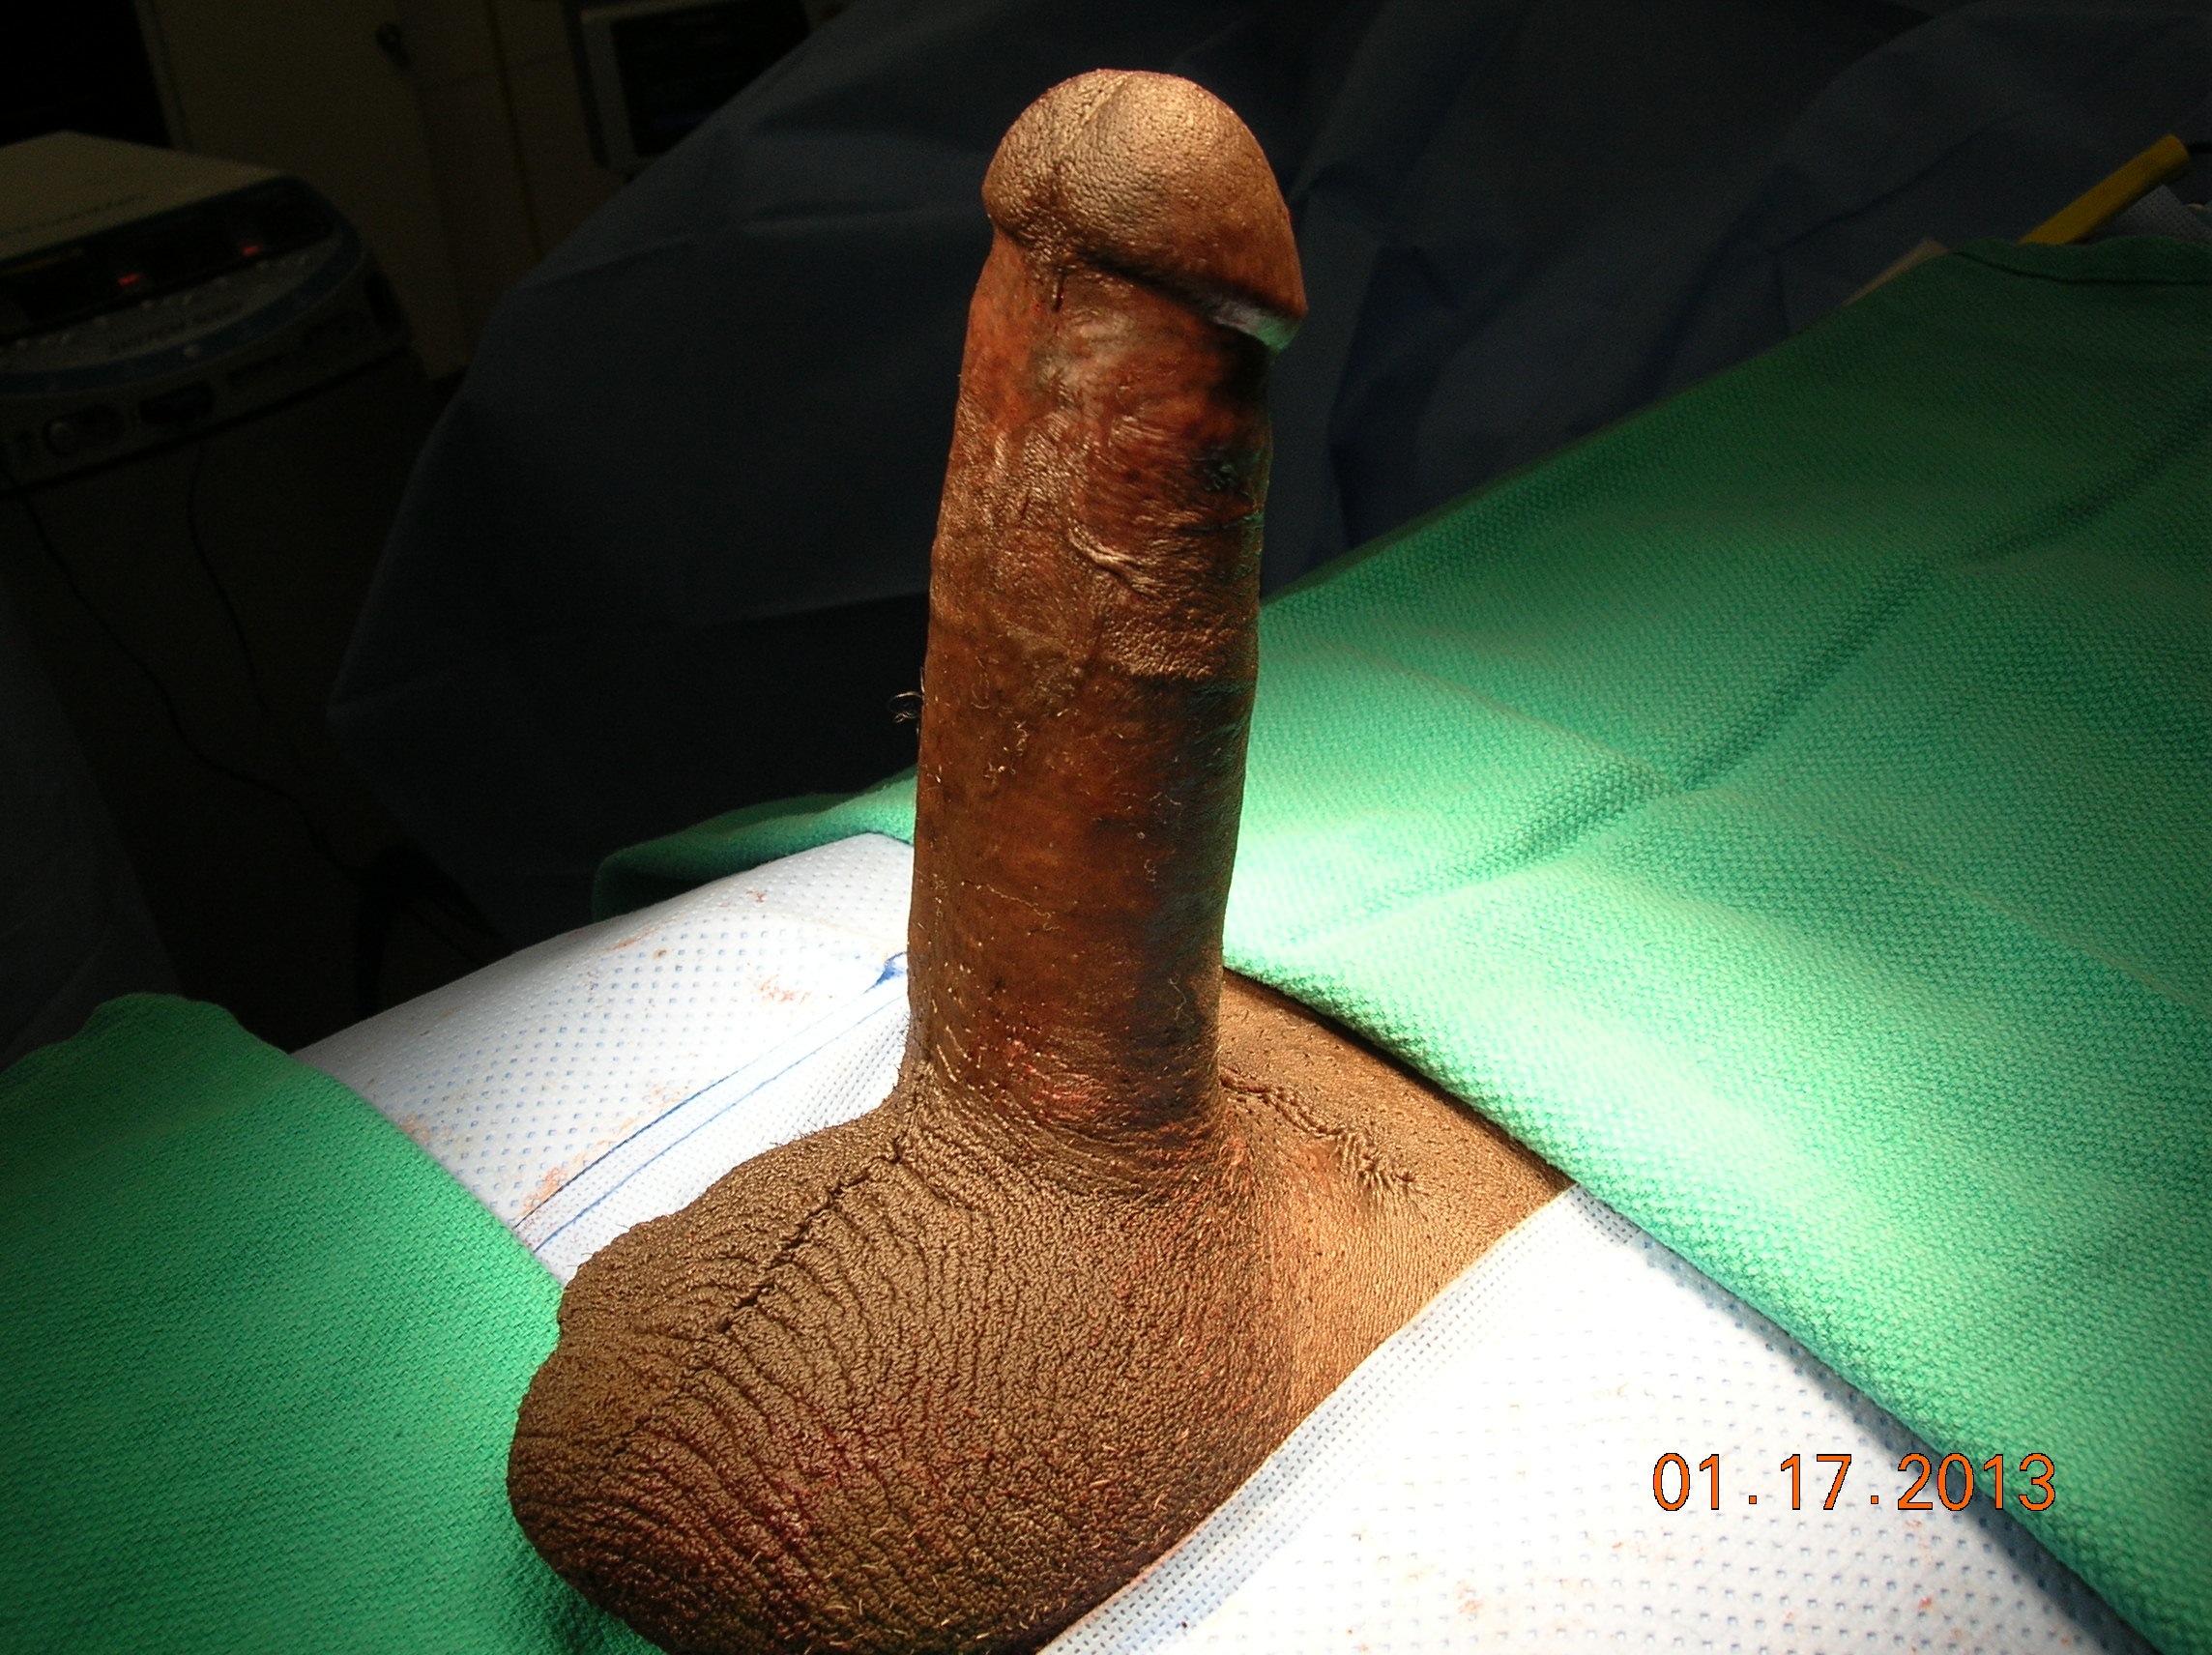 Maximum Penile Length & Girth by Dr. Garber